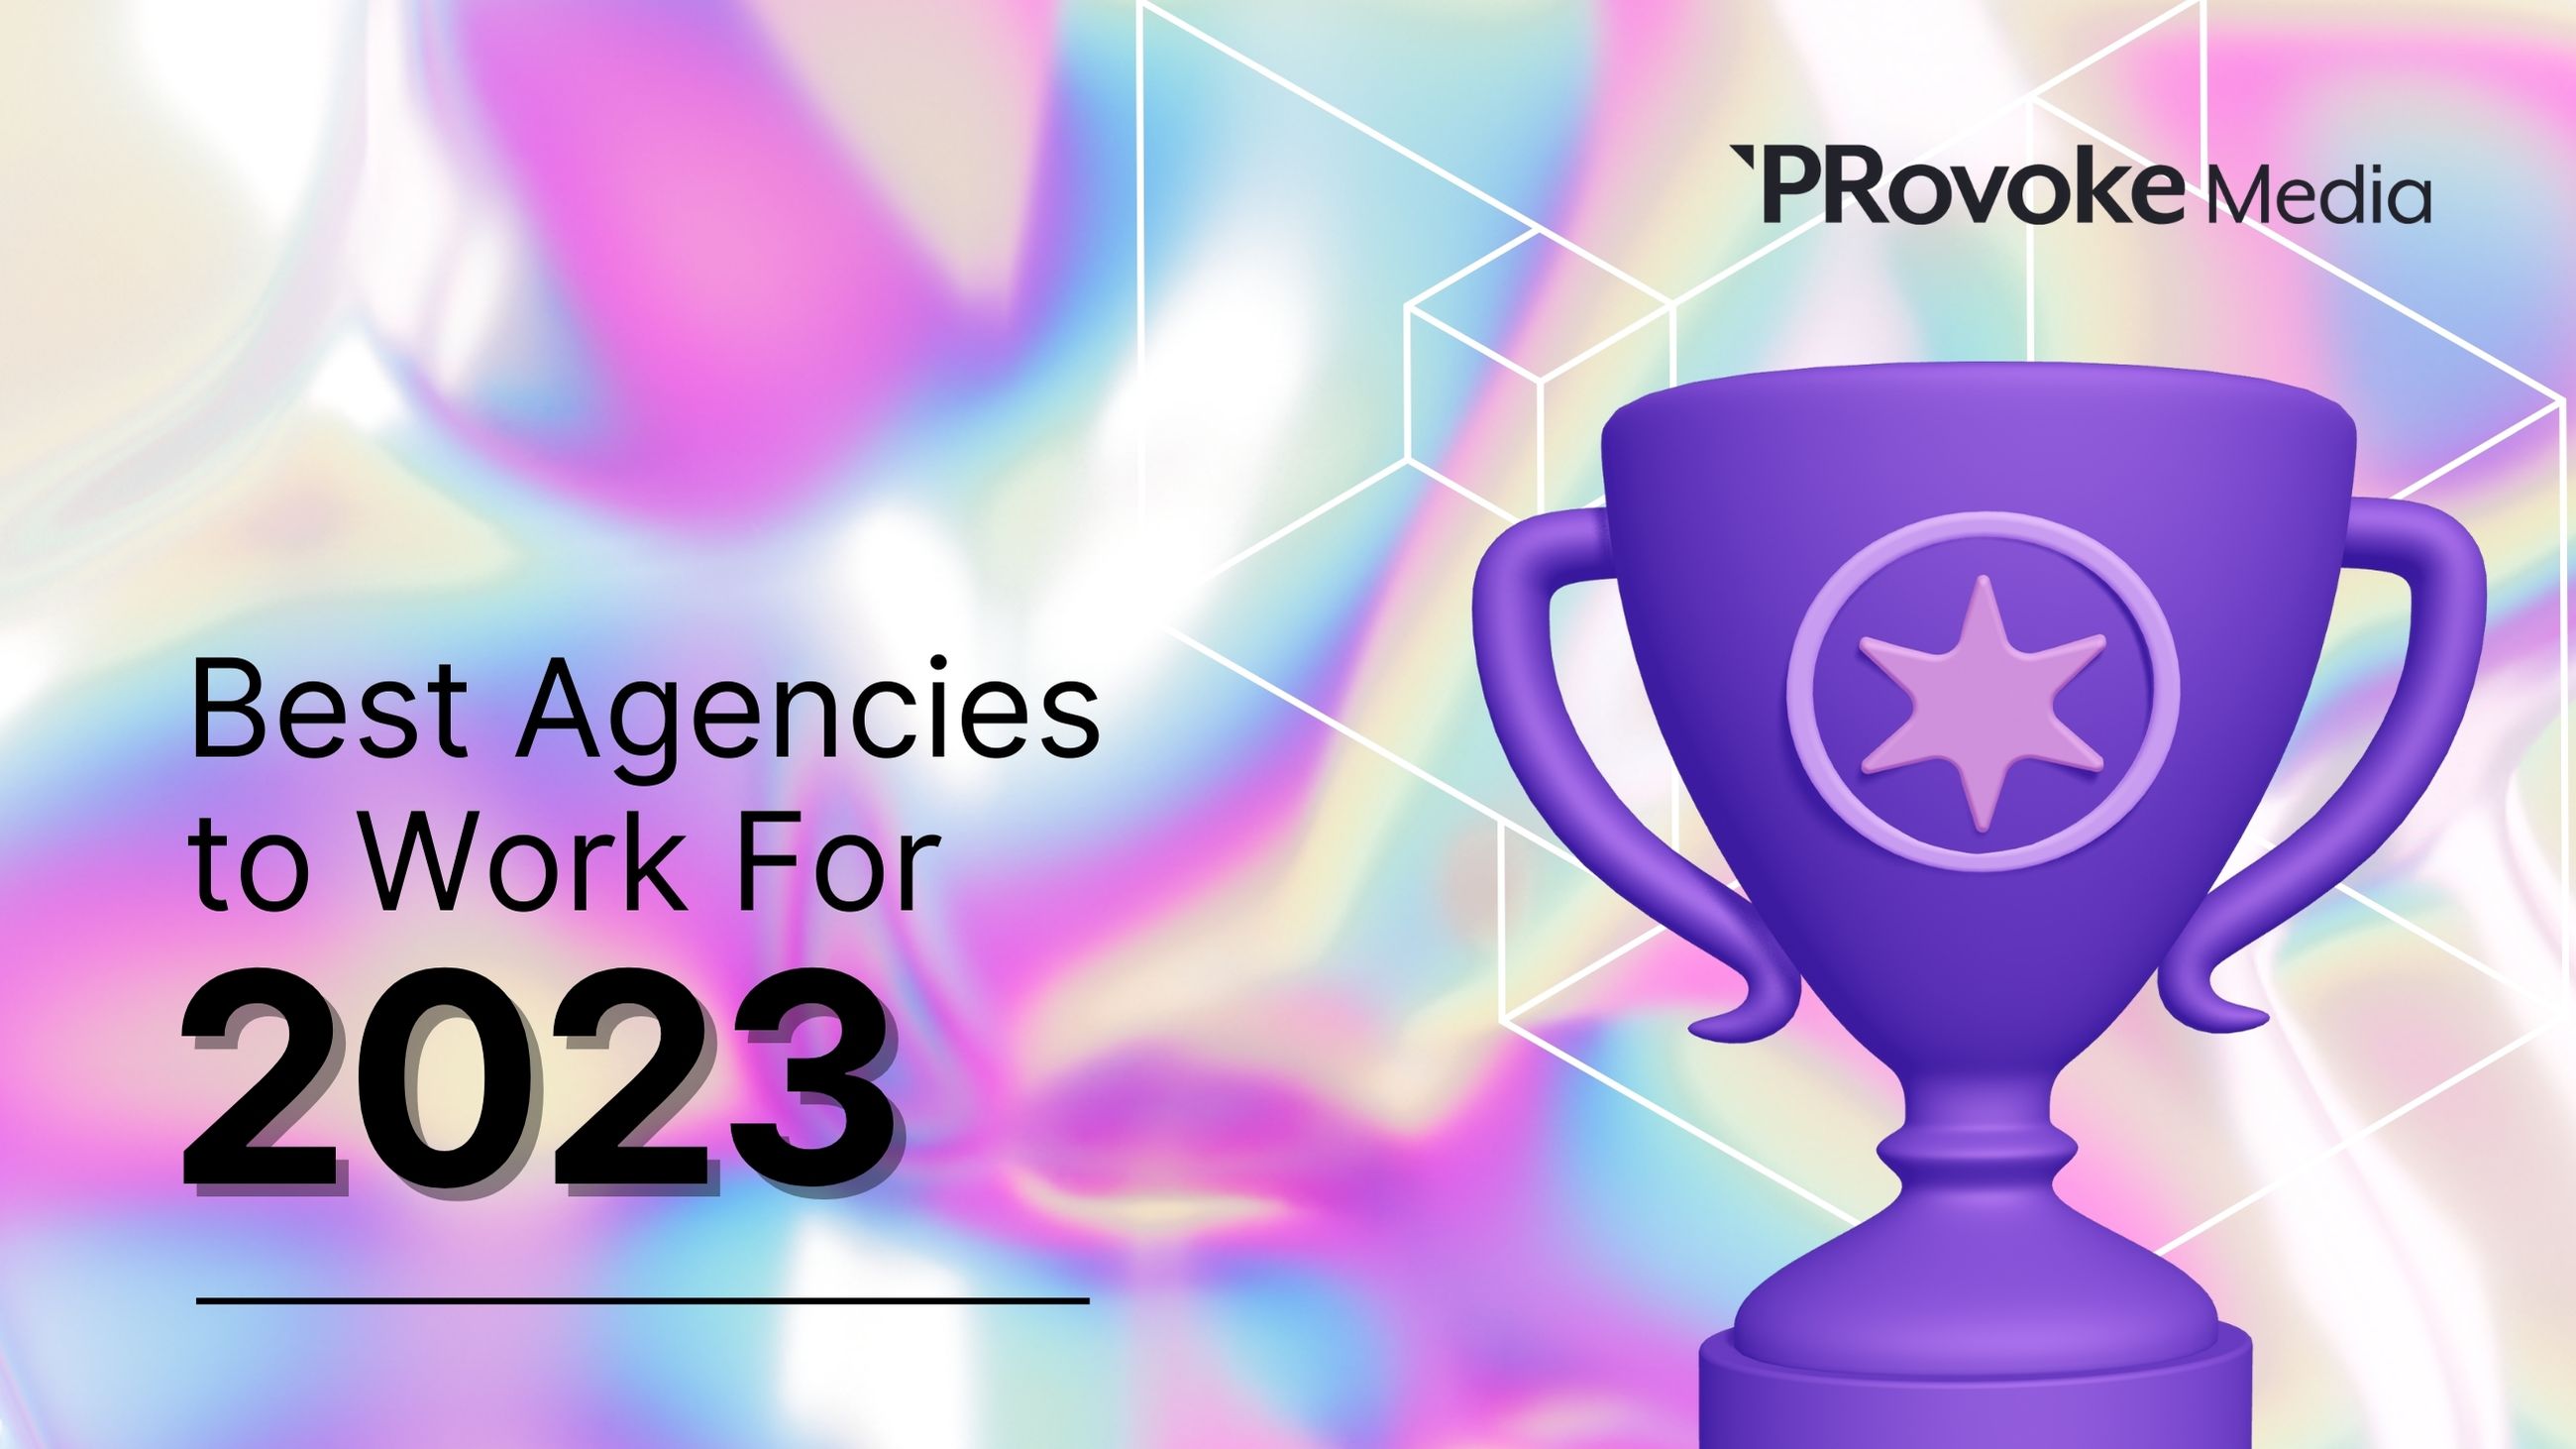 America's Best PR Agencies 2021